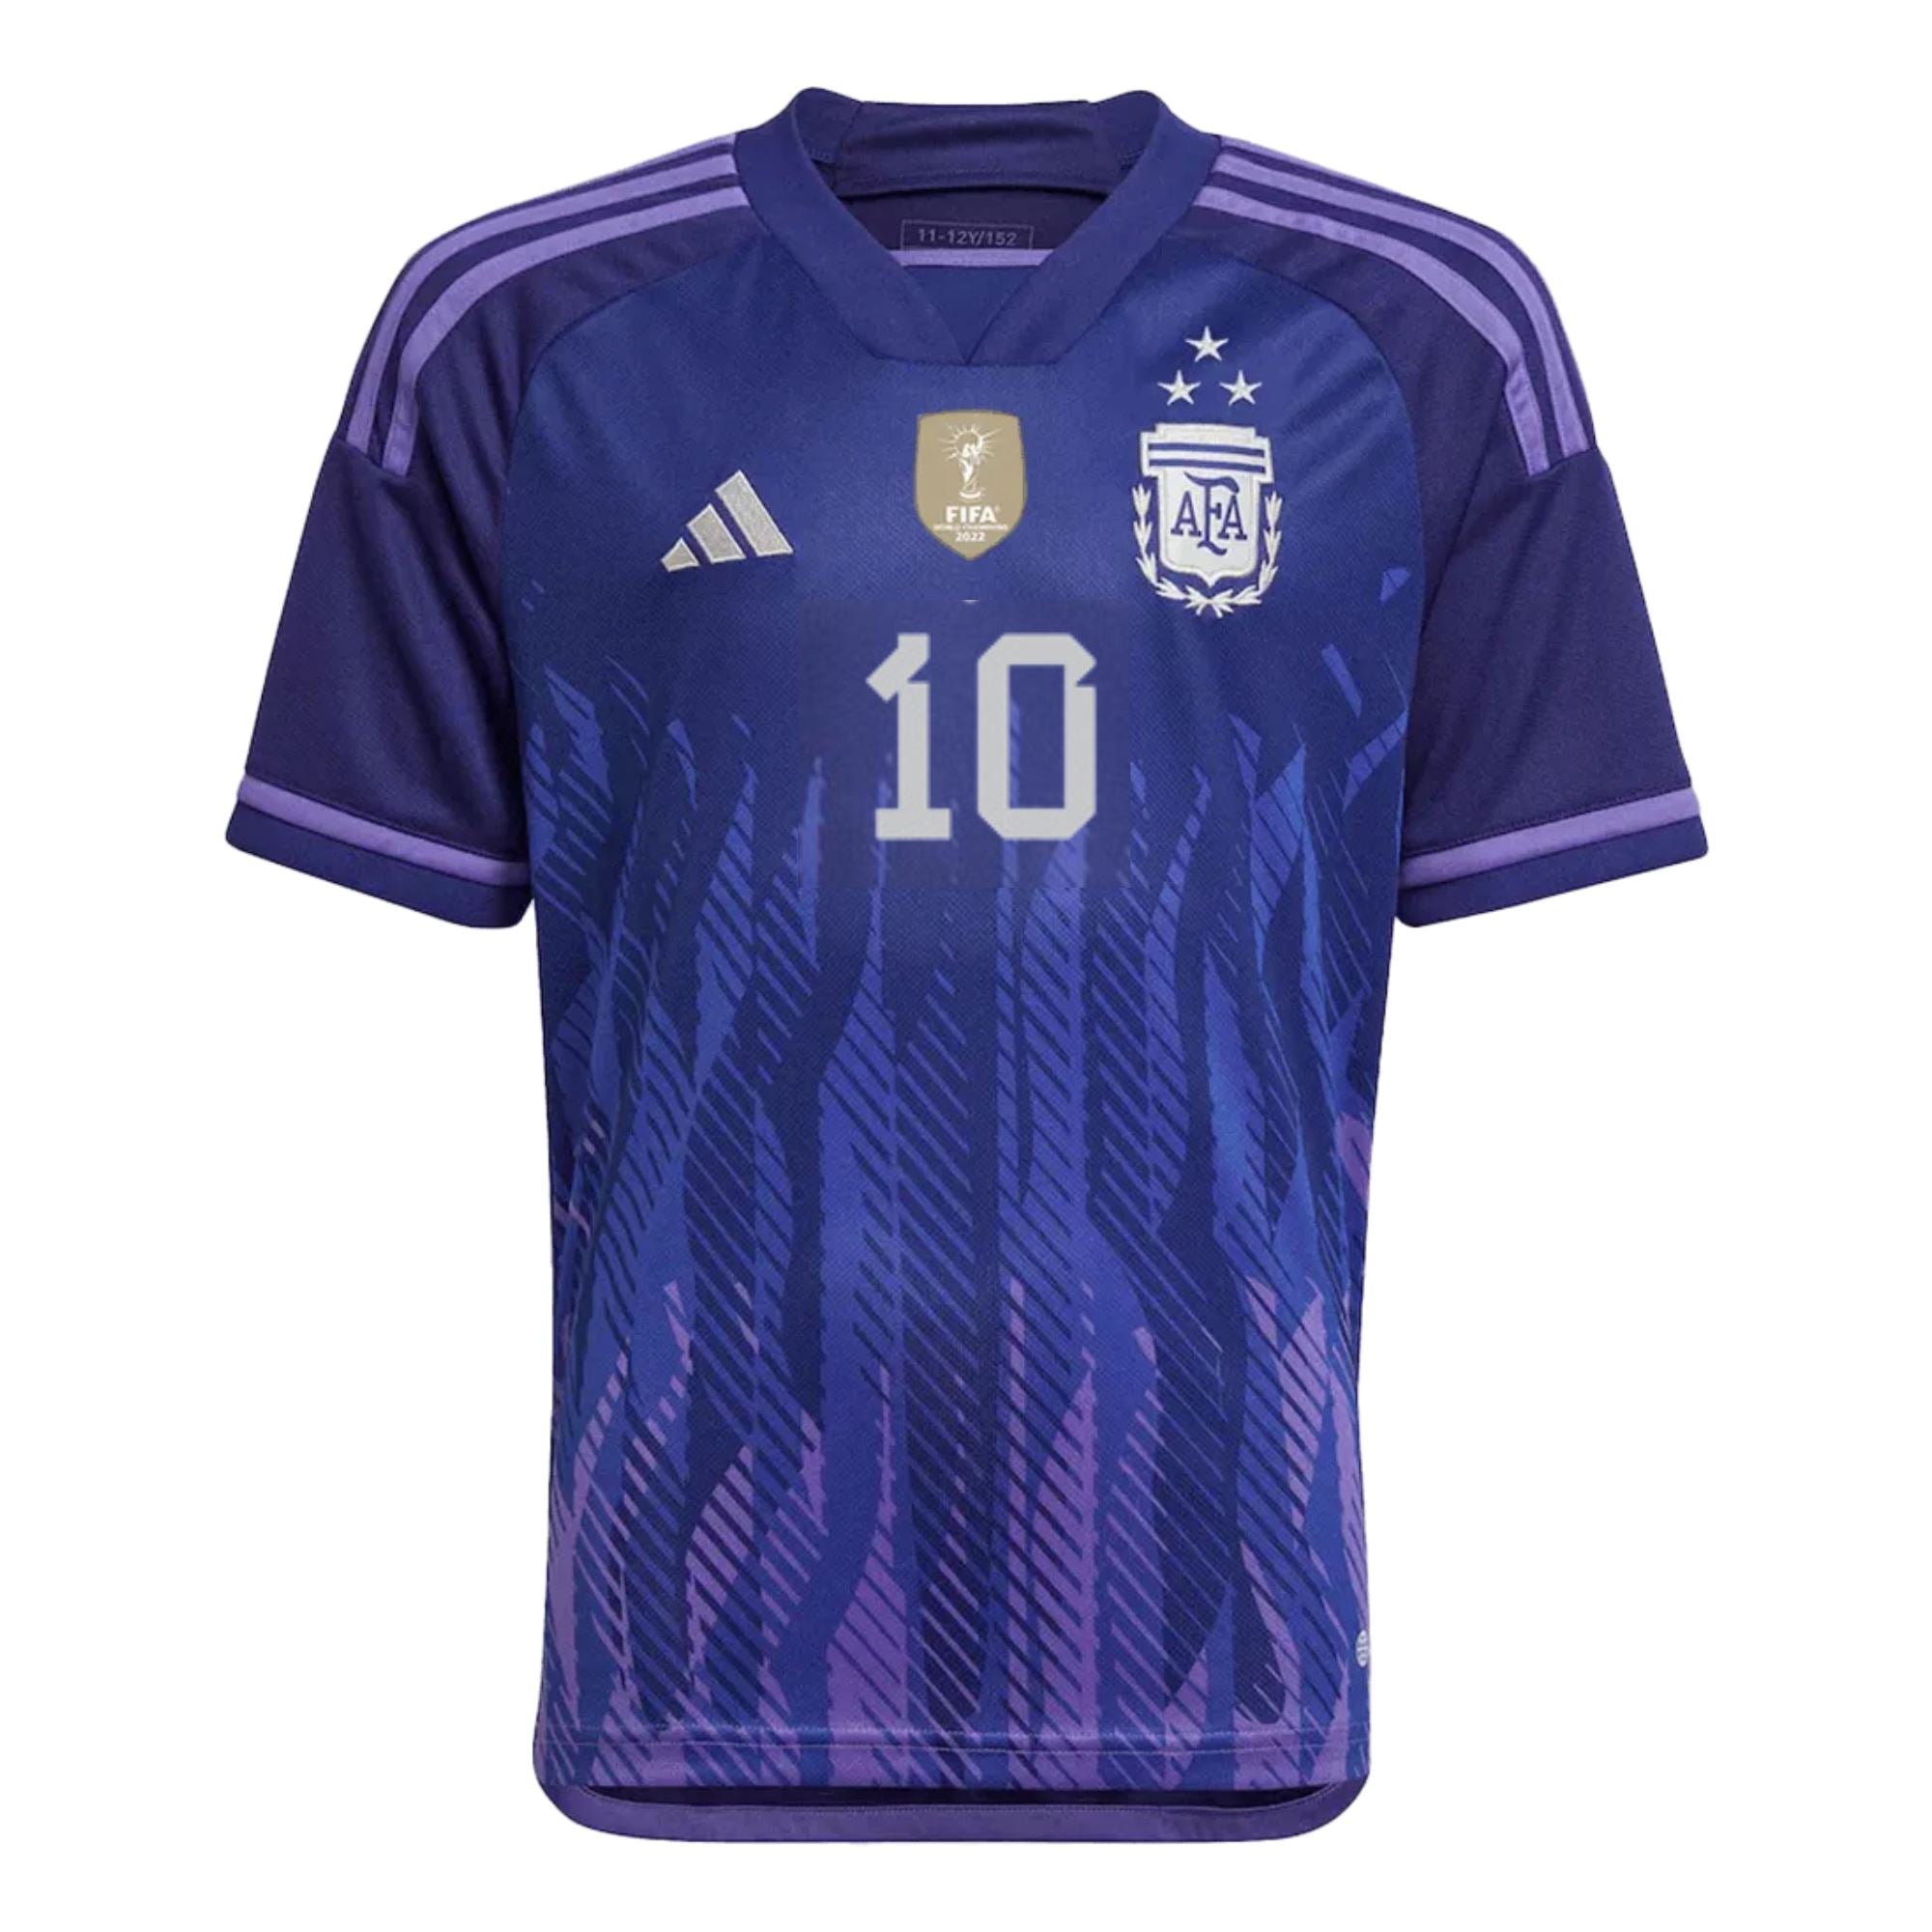 Brazil 2022 Home Neymar Jr. 10 Kids Soccer Uniform Jersey Top Shorts for  Boys Girls Youth Sizes Ships Fast From US 